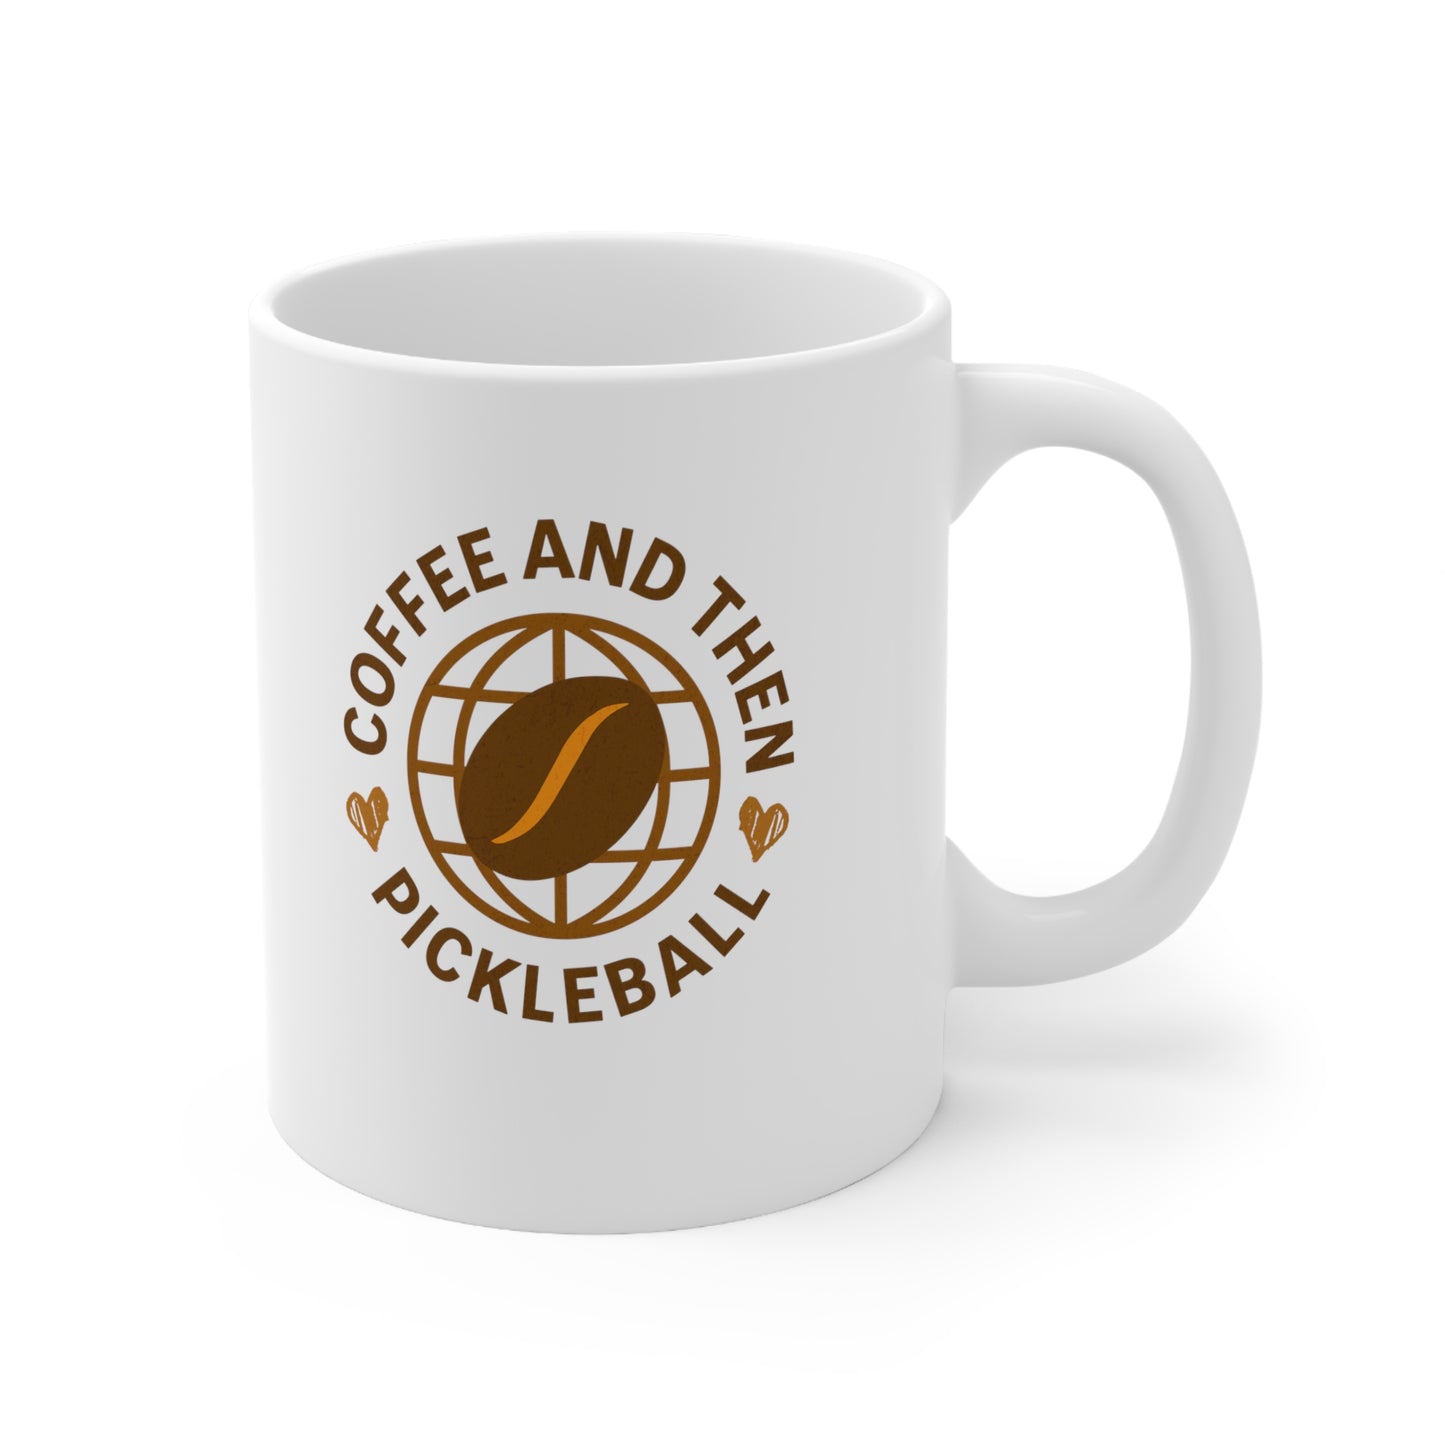 Coffee and Then Pickleball - Custom Mug